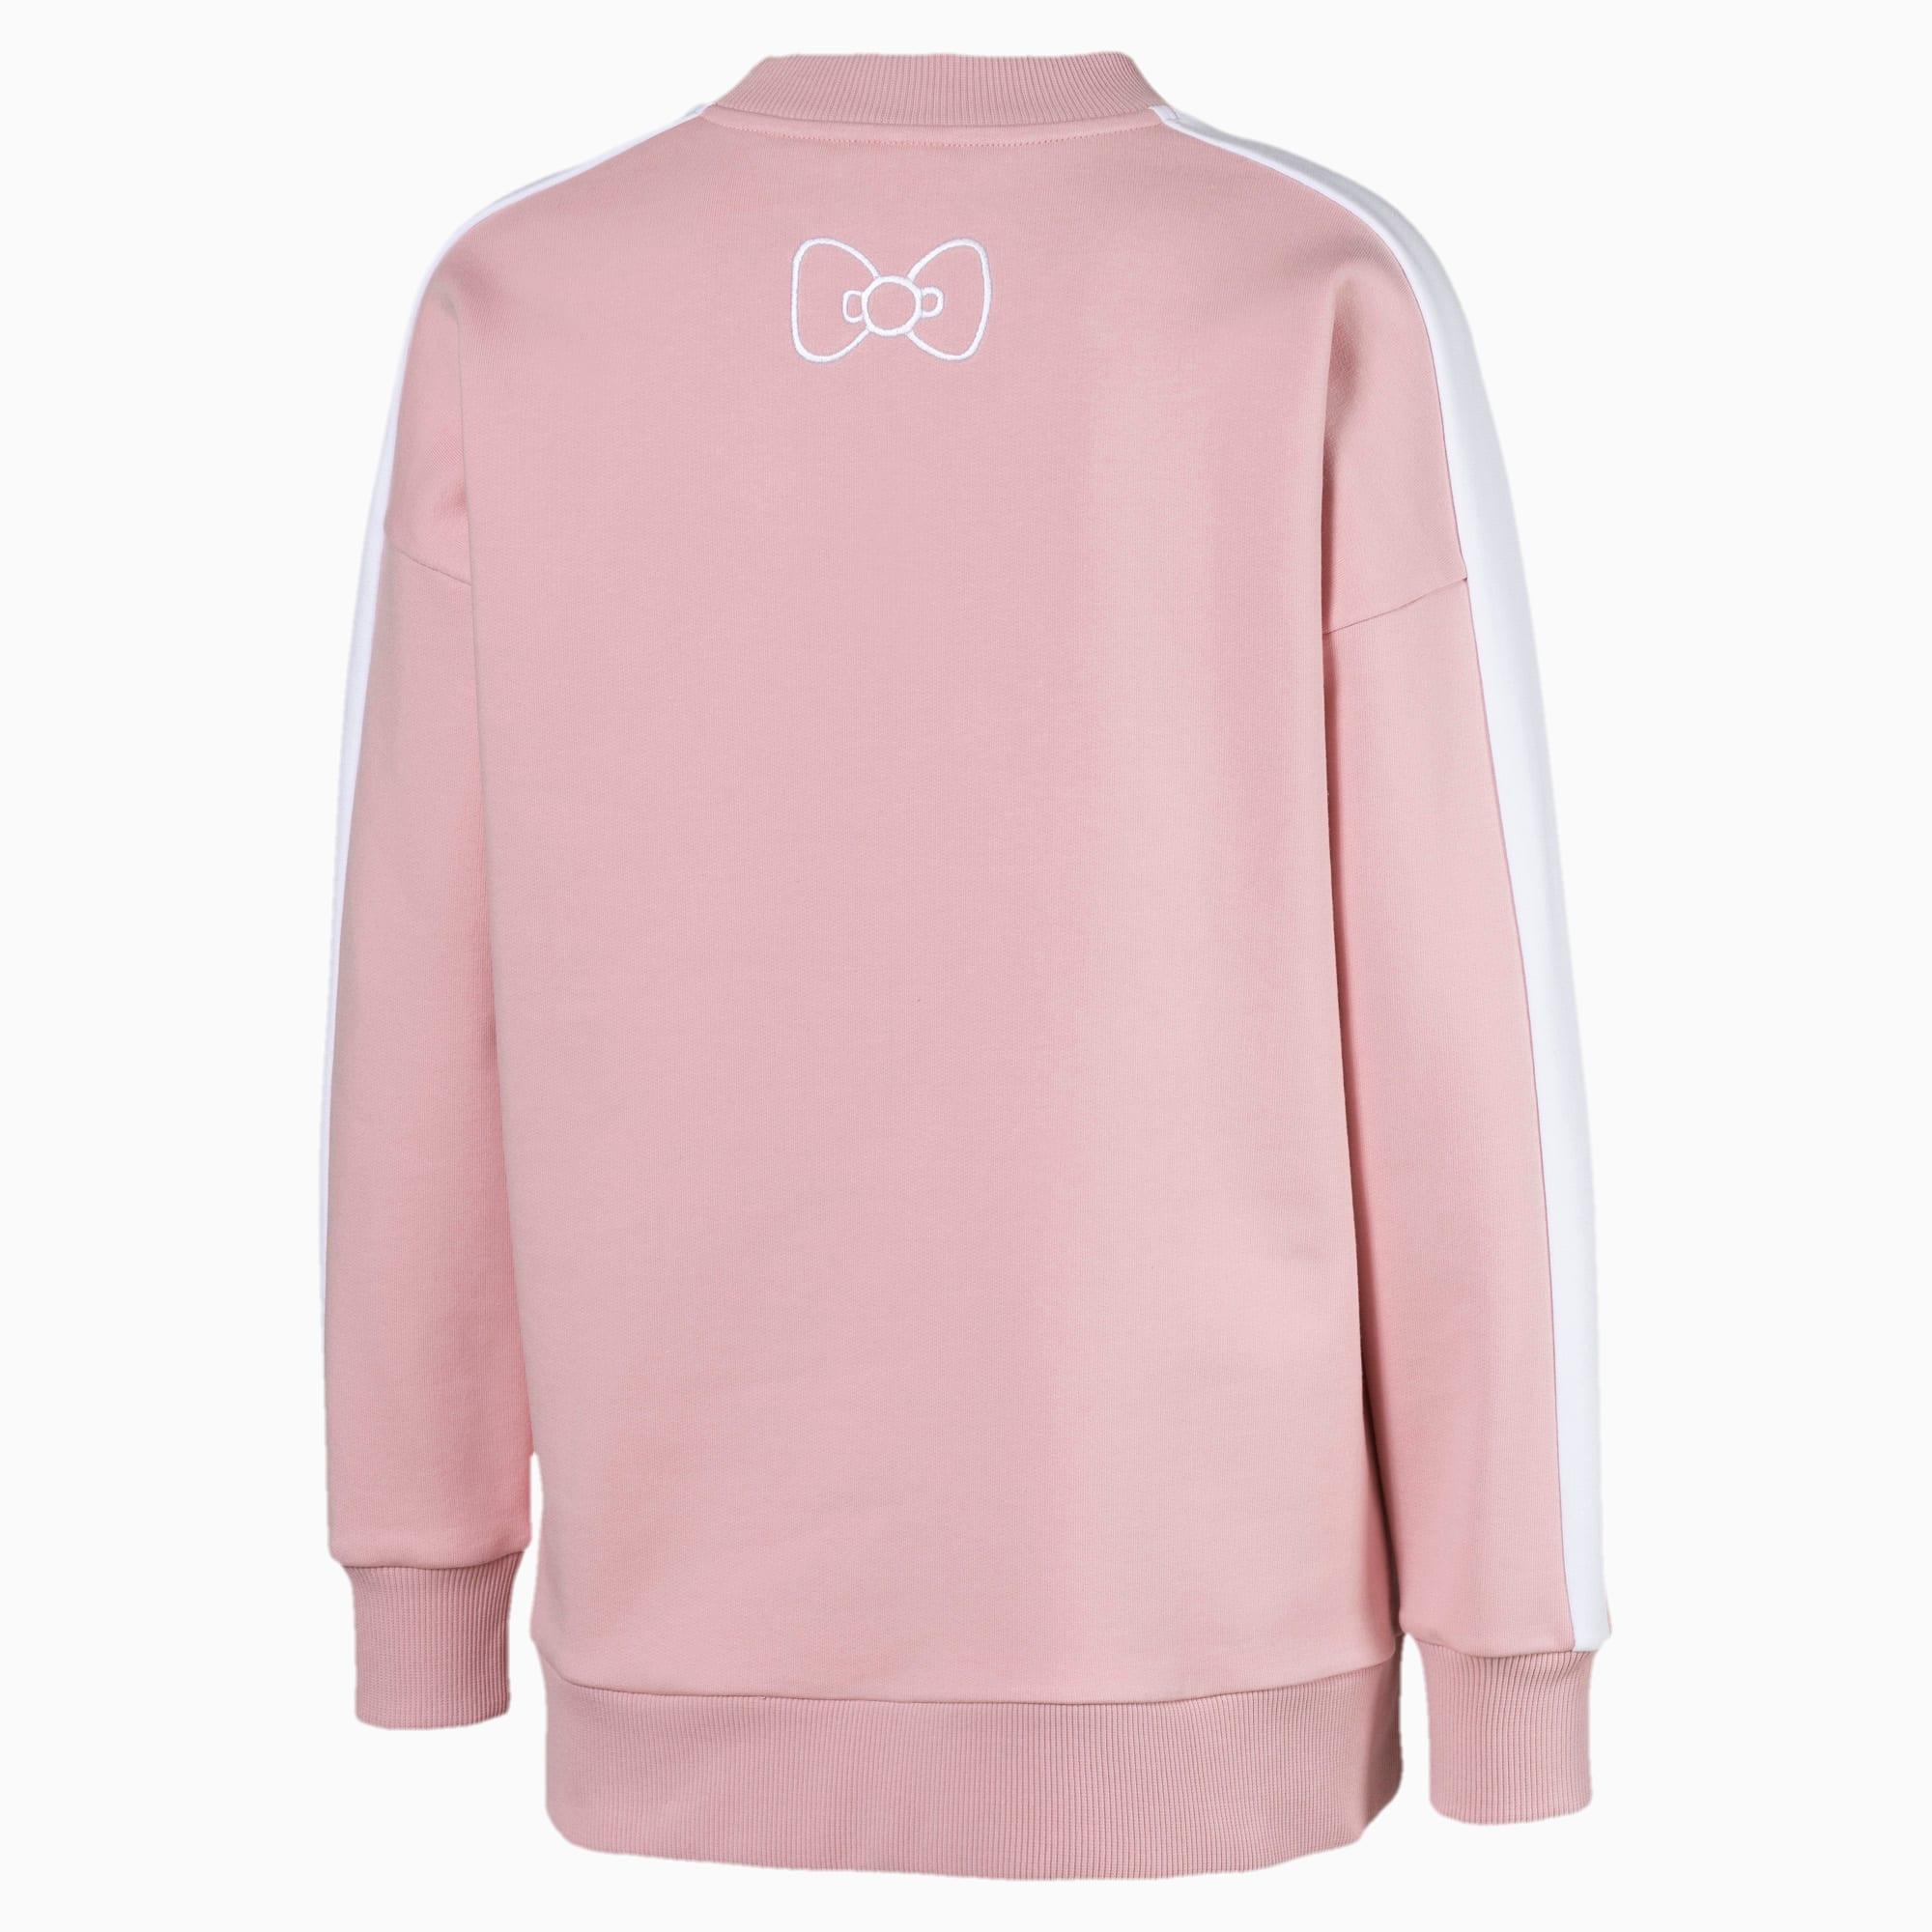 PUMA Cotton X Hello Kitty Women's Crewneck Sweatshirt in Silver Pink (Pink)  | Lyst